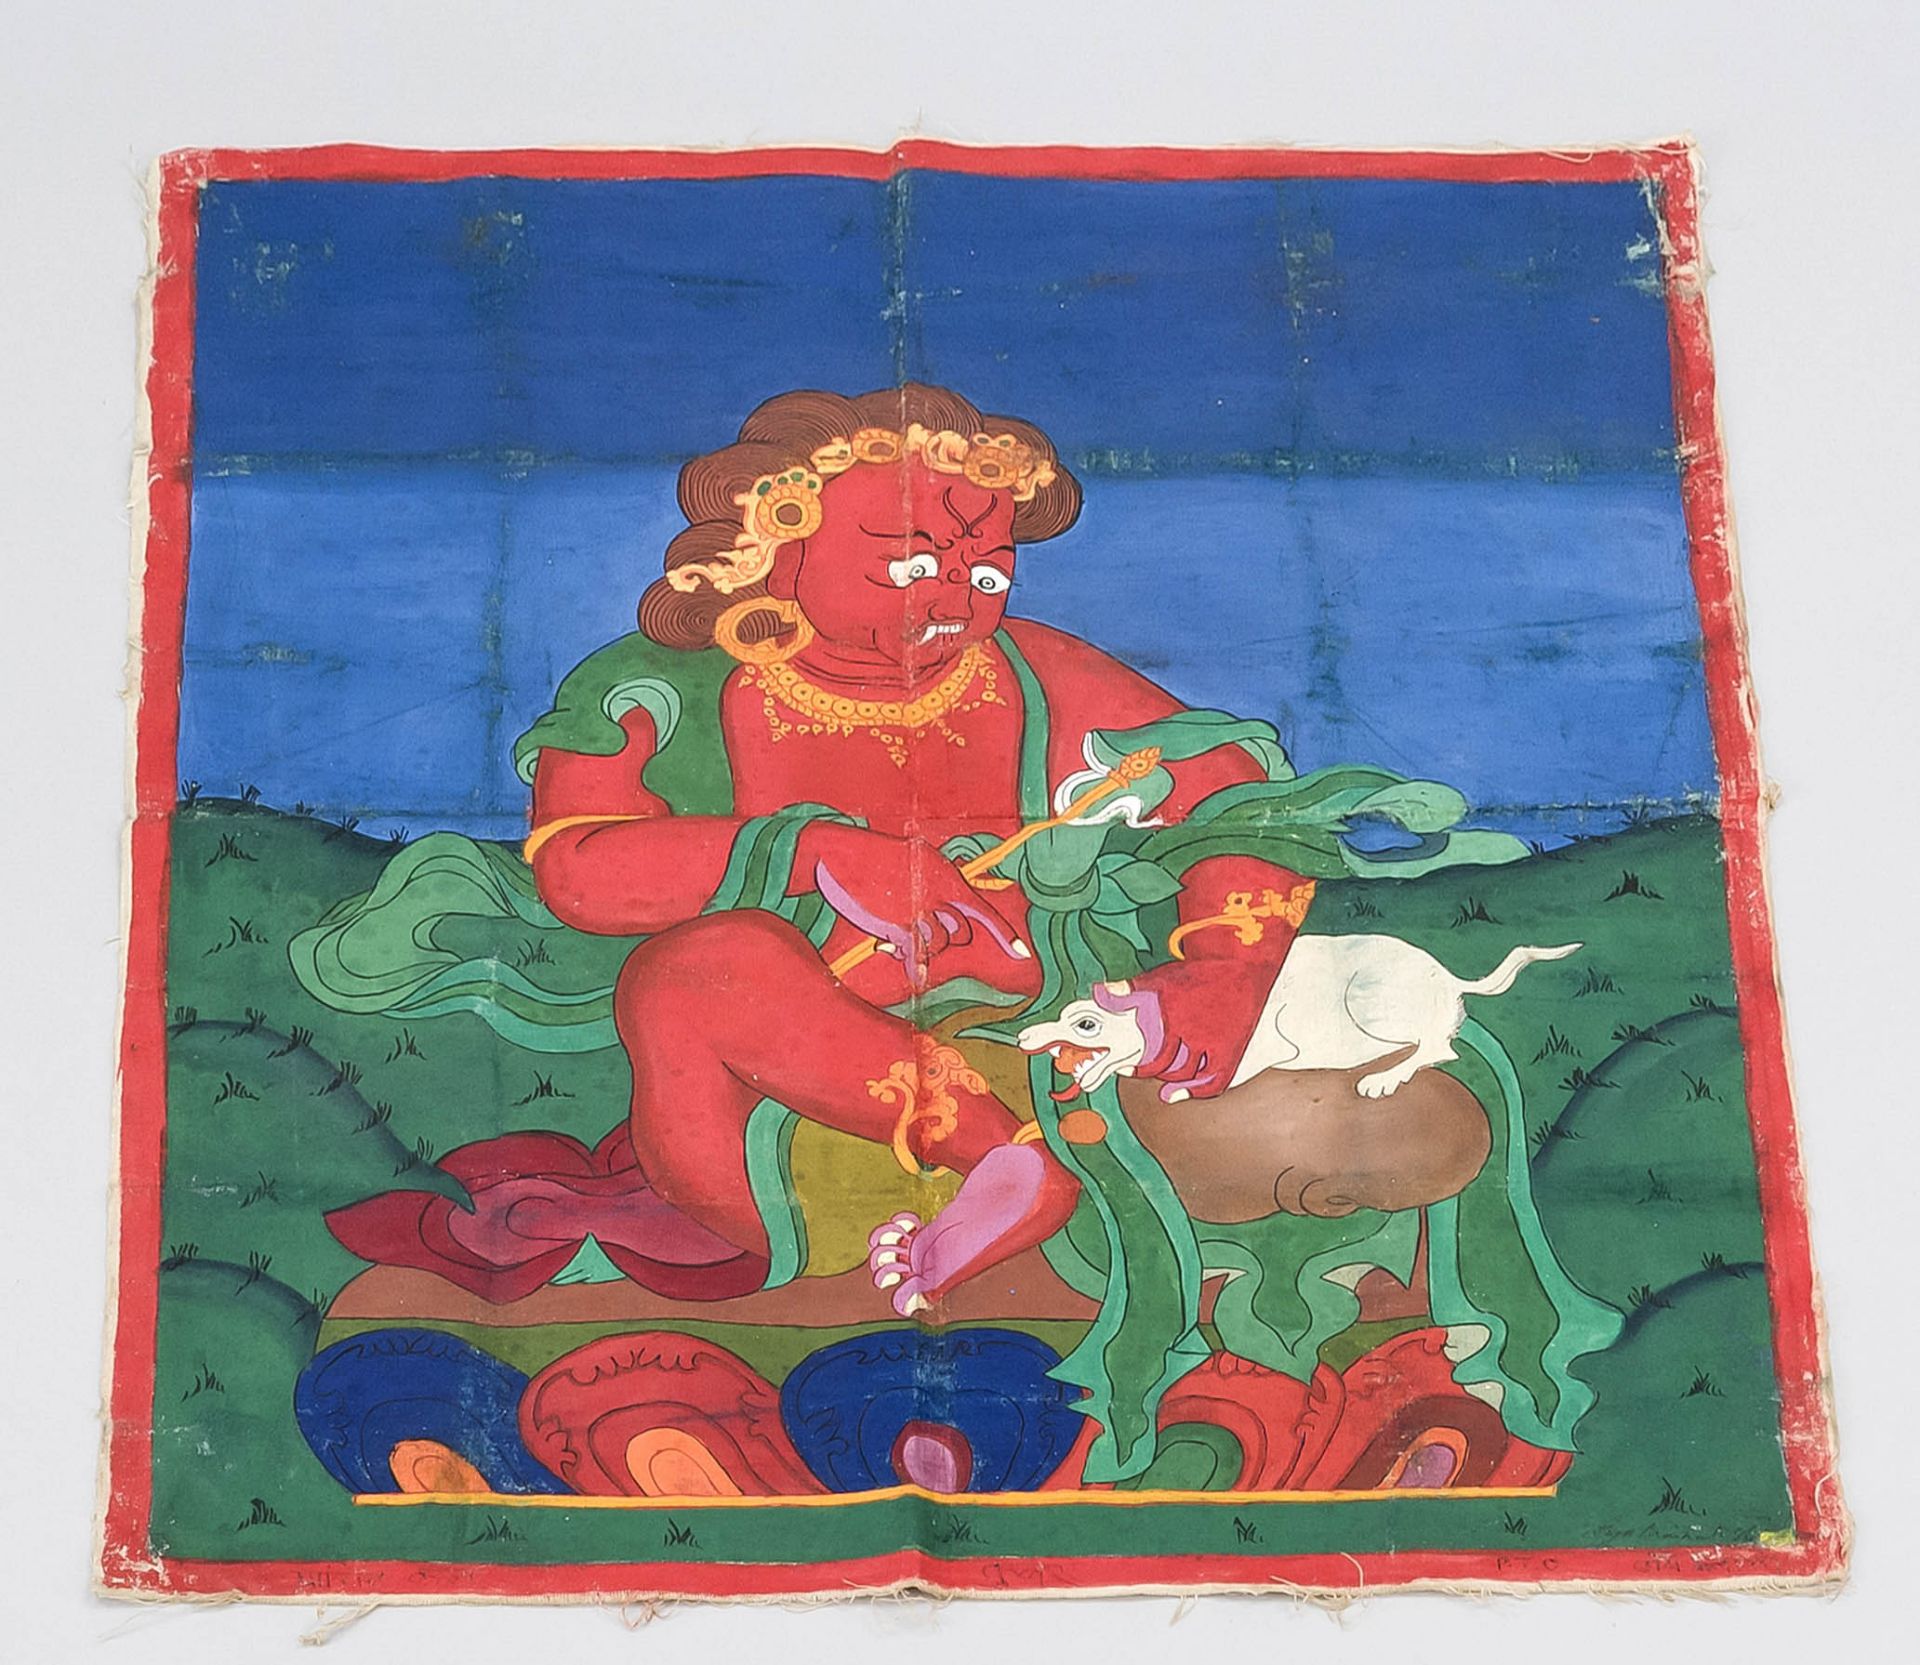 Jambhala? with rat, Tibet? Mongolia?, 19th/20th century, polychrome pigments on cloth. USSR import-